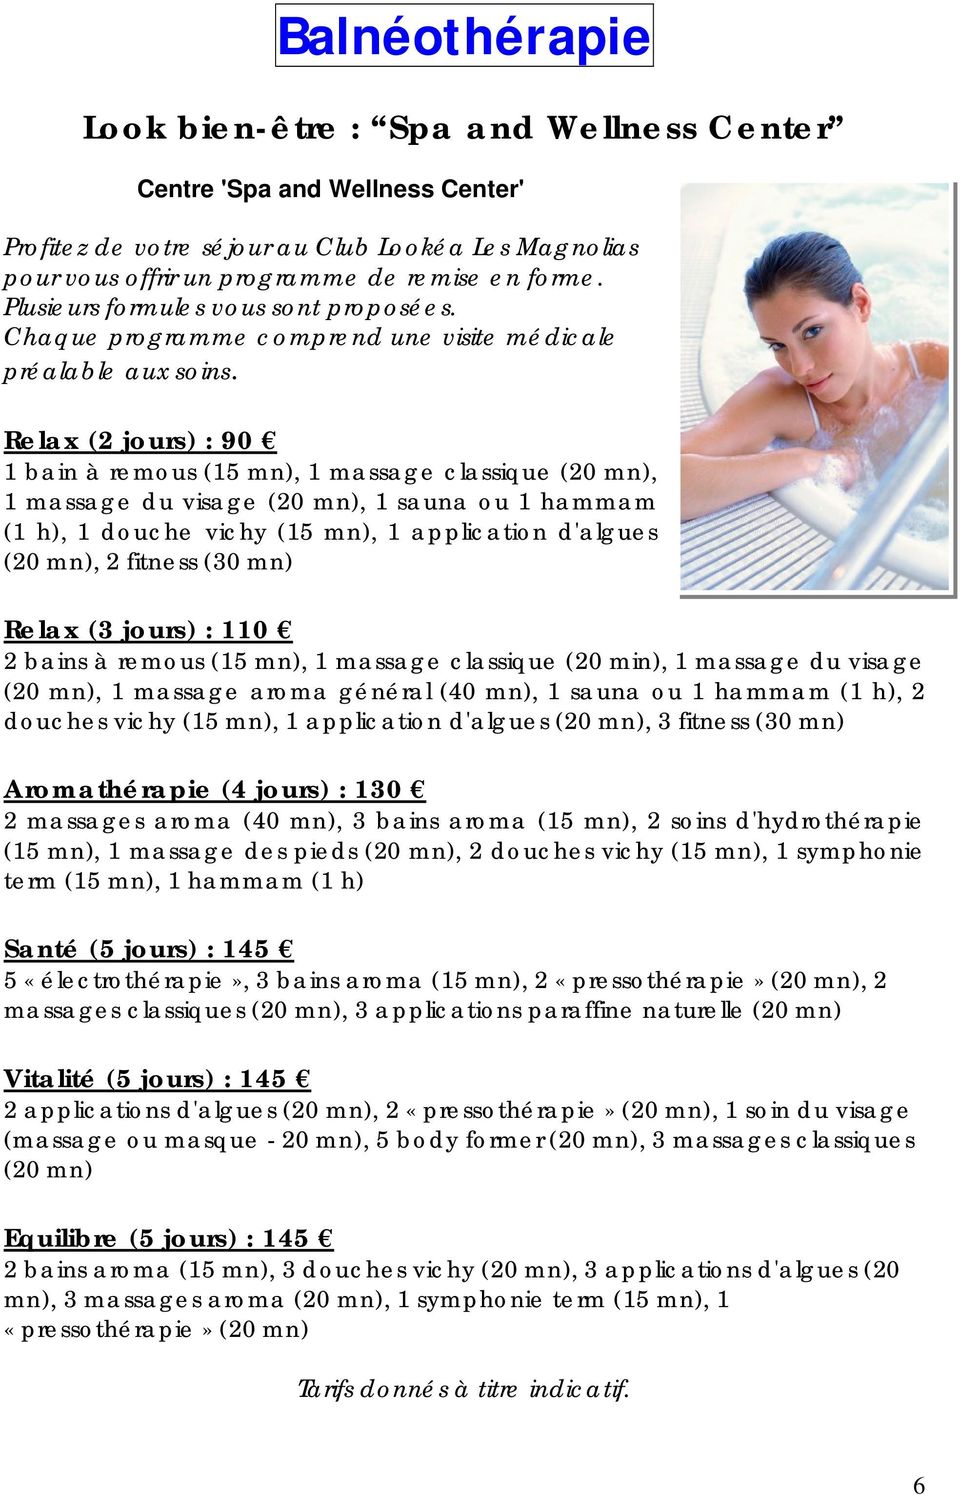 Relax (2 jours) : 90 1 bain à remous (15 mn), 1 massage classique (20 mn), 1 massage du visage (20 mn), 1 sauna ou 1 hammam (1 h), 1 douche vichy (15 mn), 1 application d'algues (20 mn), 2 fitness